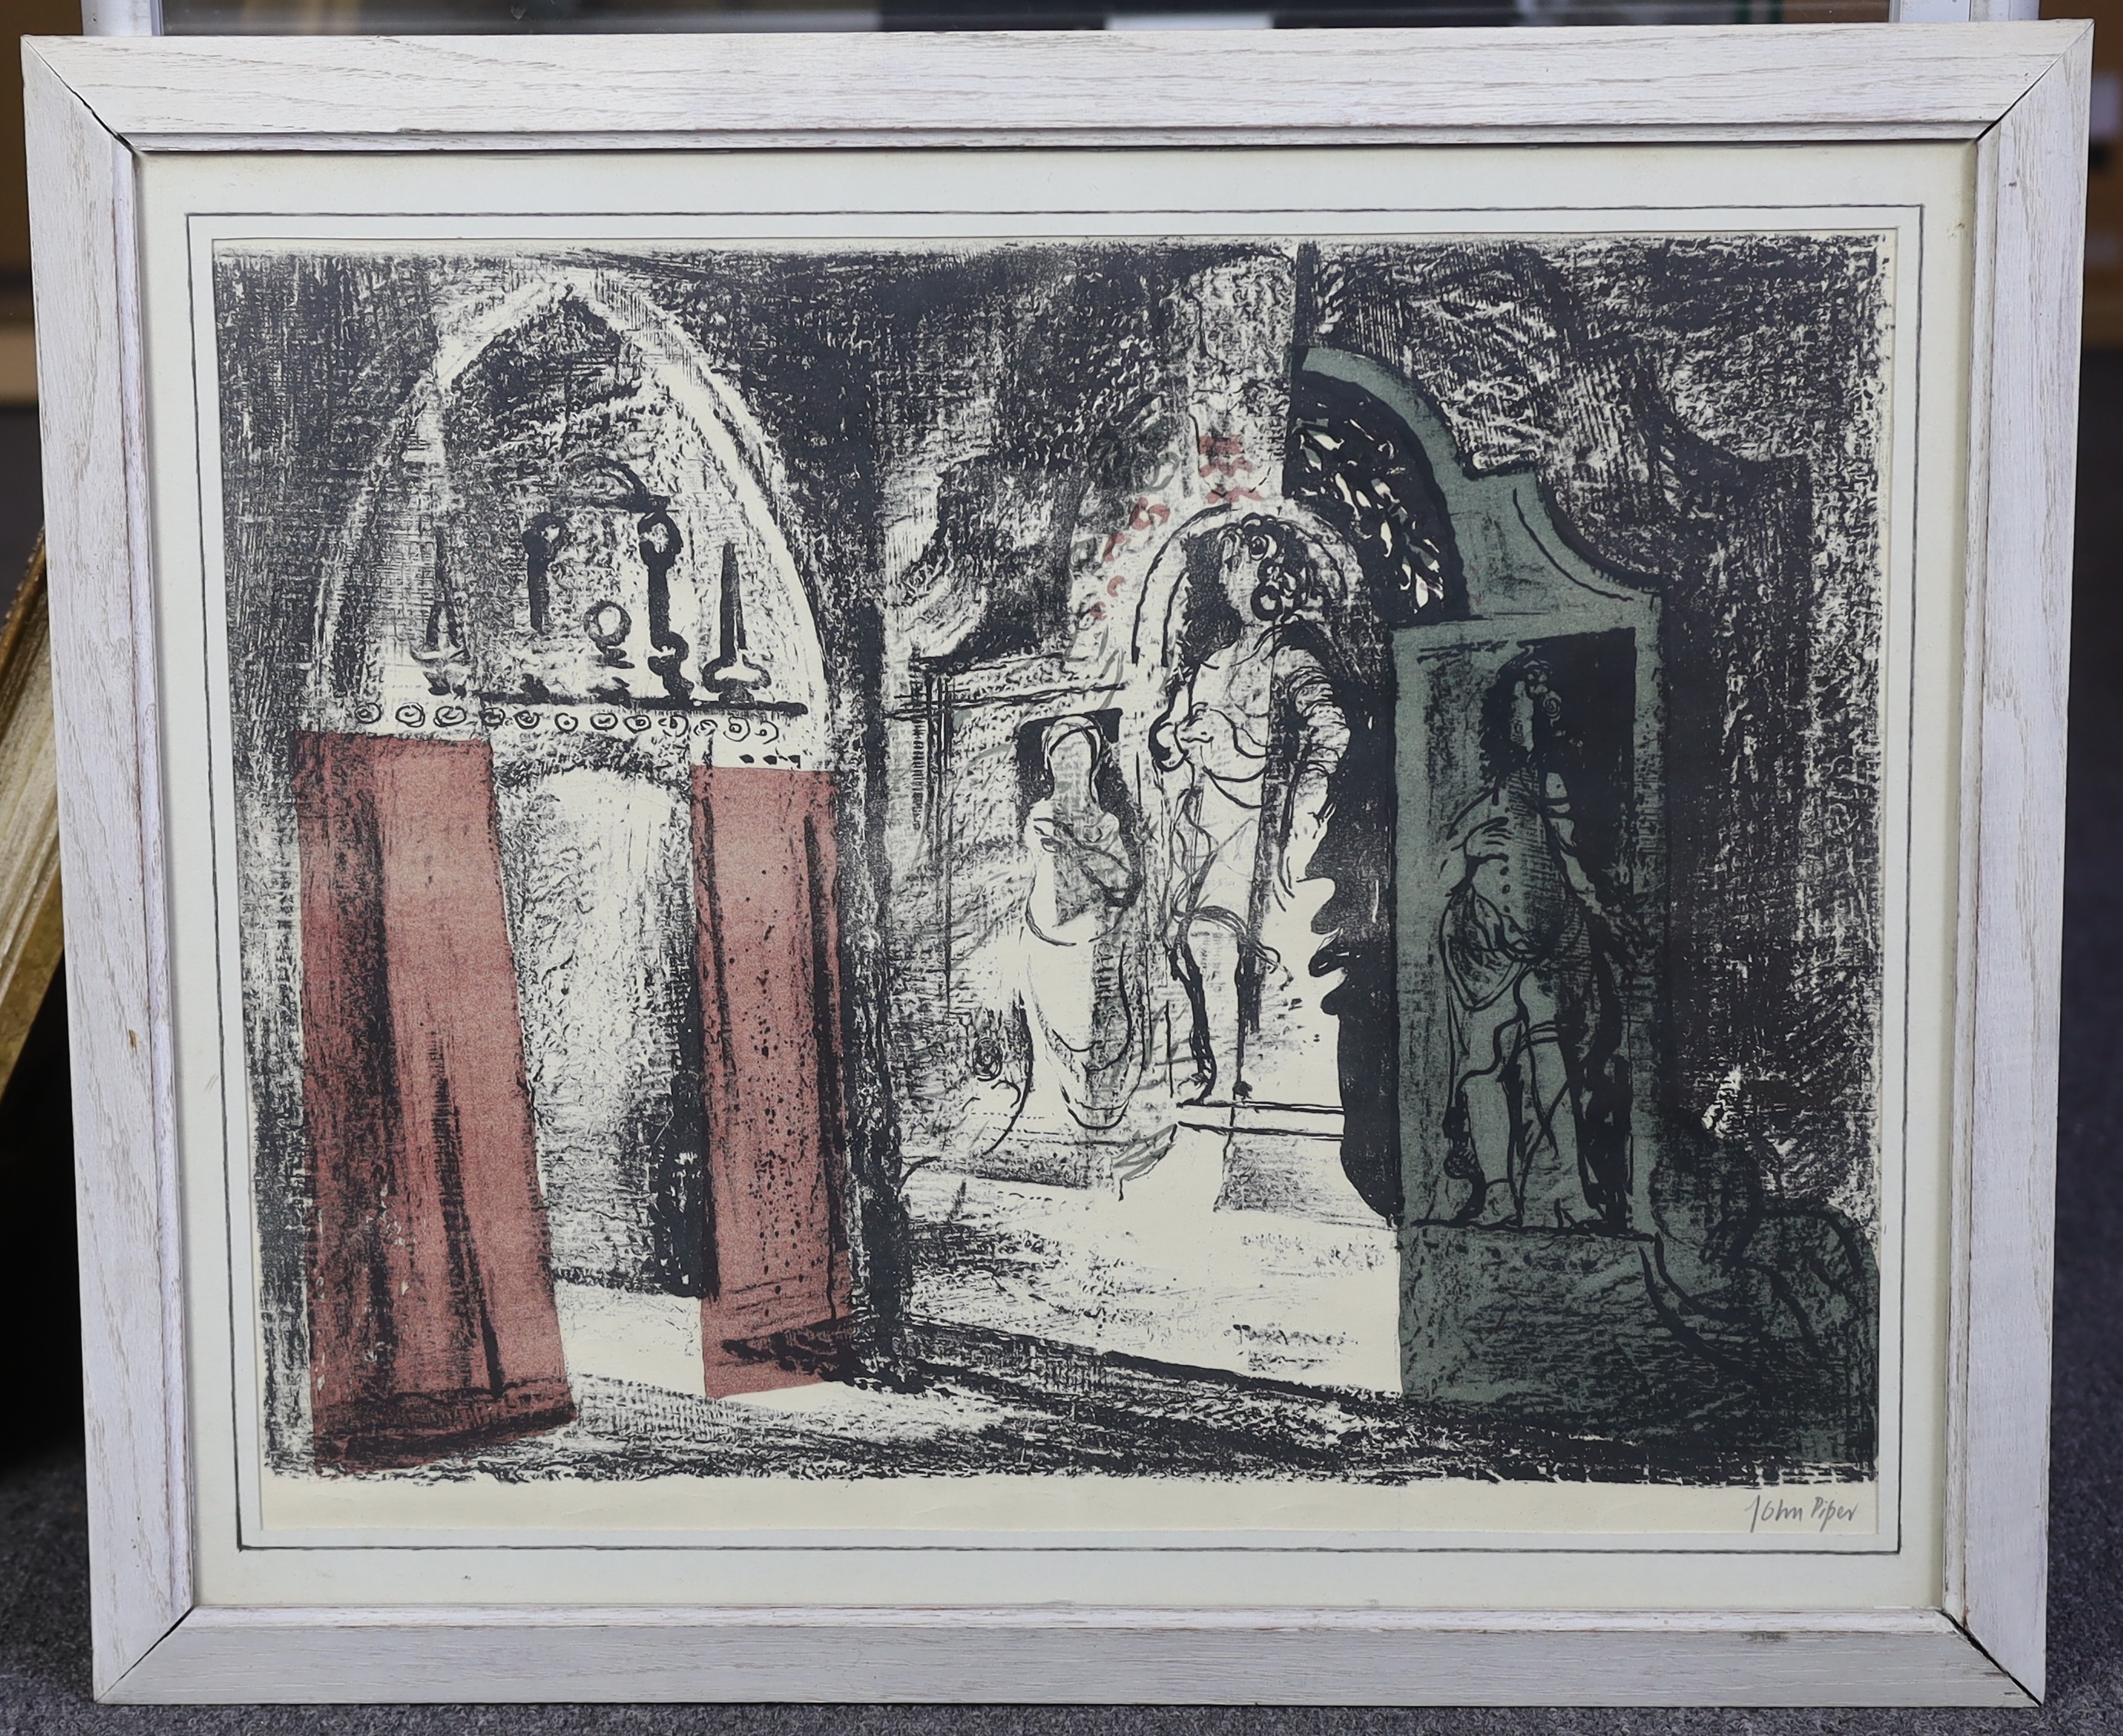 John Piper (English, 1903-1992), Yarnton Monument, Oxon (Levinson 70), coloured lithograph, 40.5 x 51cm